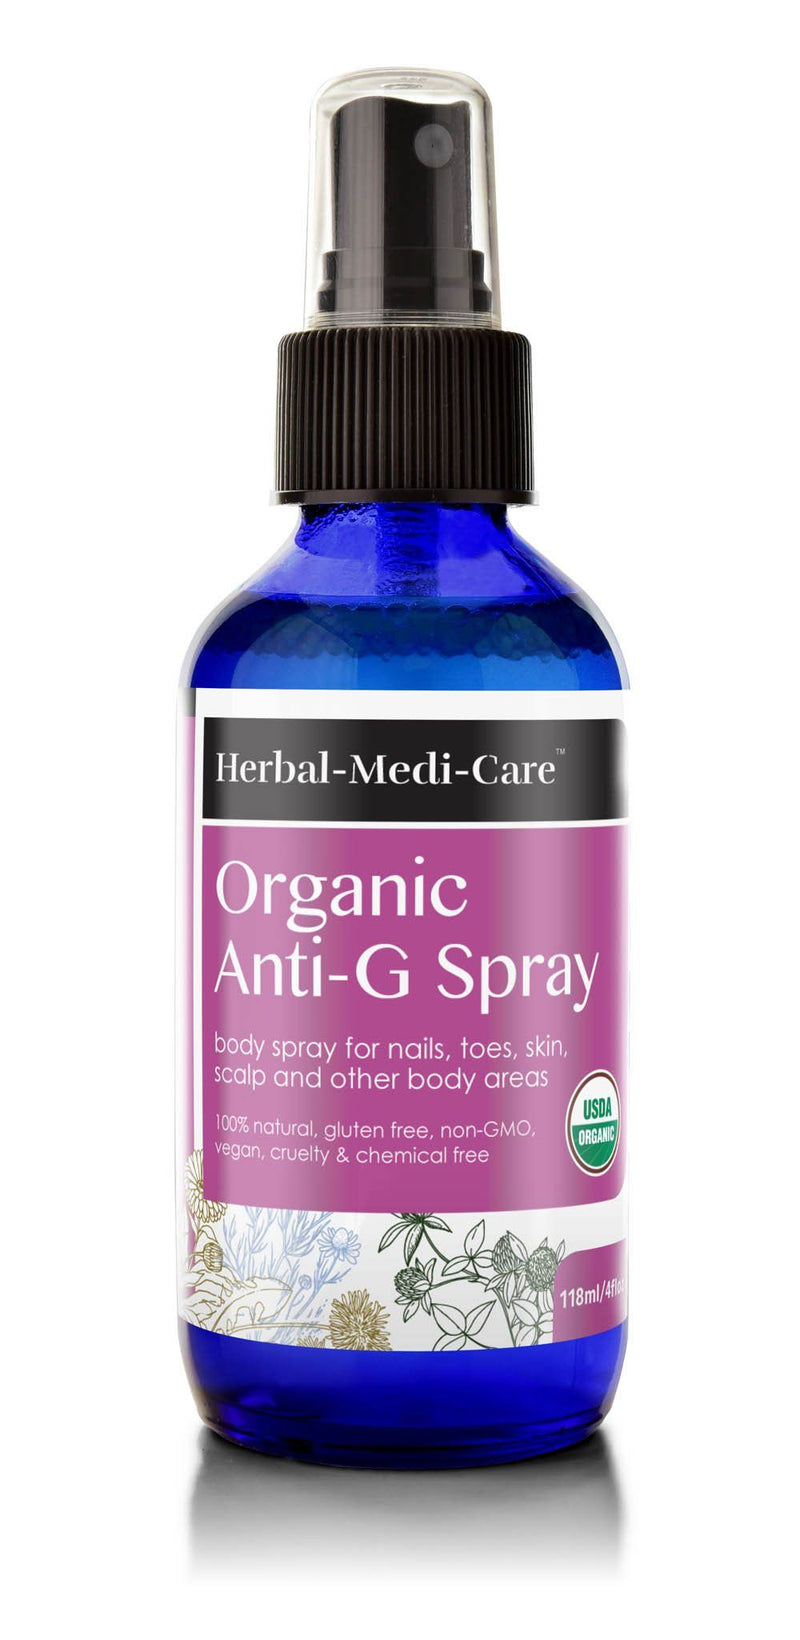 Herbal-Medi-Care Organic Anti-G (Fungal) Spray; 4floz - Herbal-Medi-Care Organic Anti-G (Fungal) Spray; 4floz - Herbal-Medi-Care Organic Anti-G (Fungal) Spray; 4floz